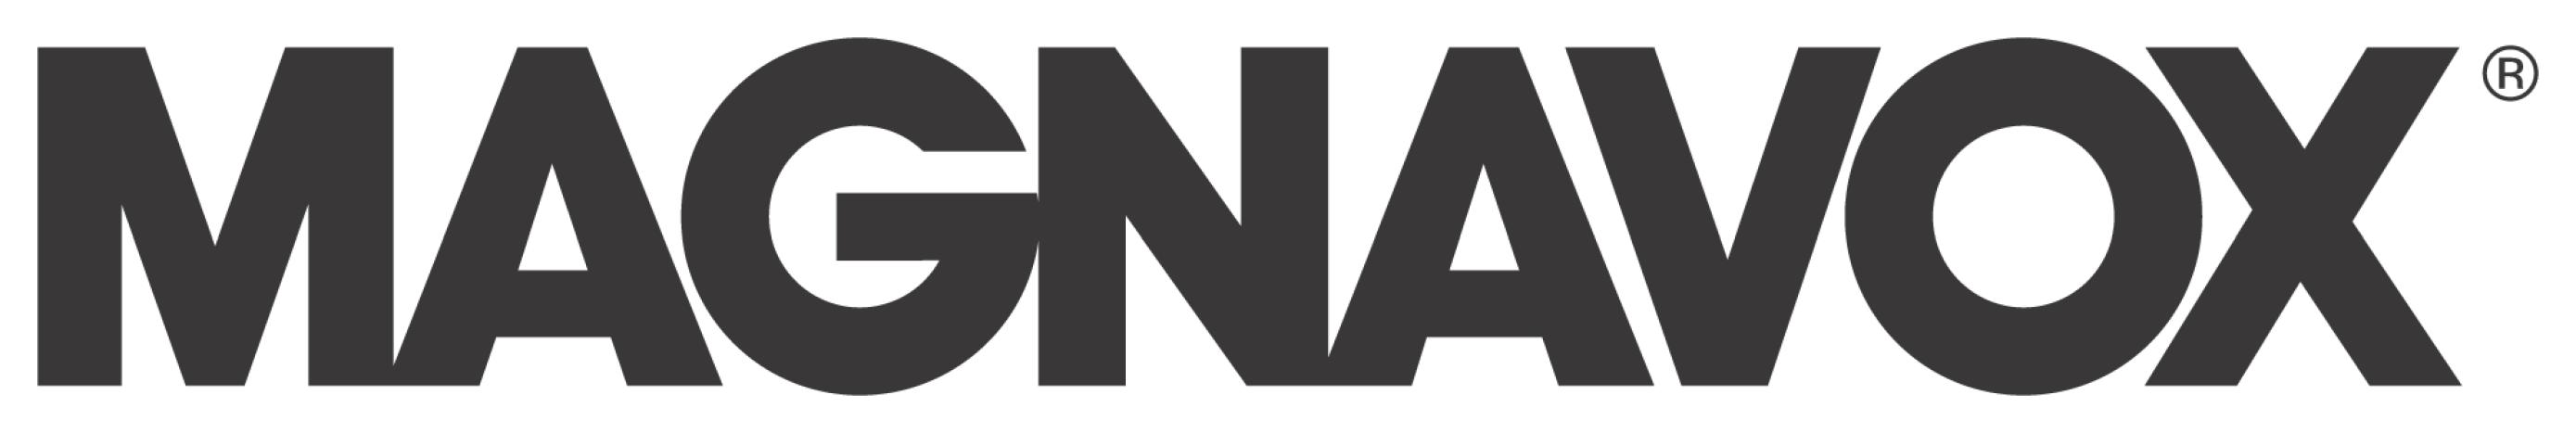 Magnavox logo (tm)